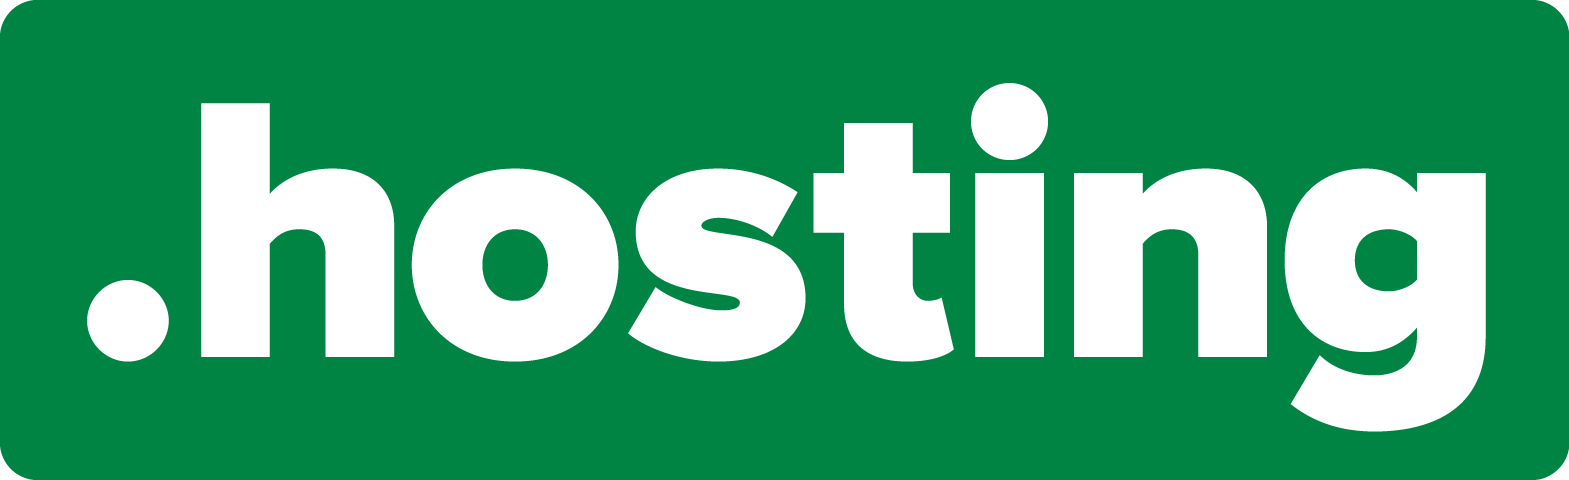 HOSTING logo